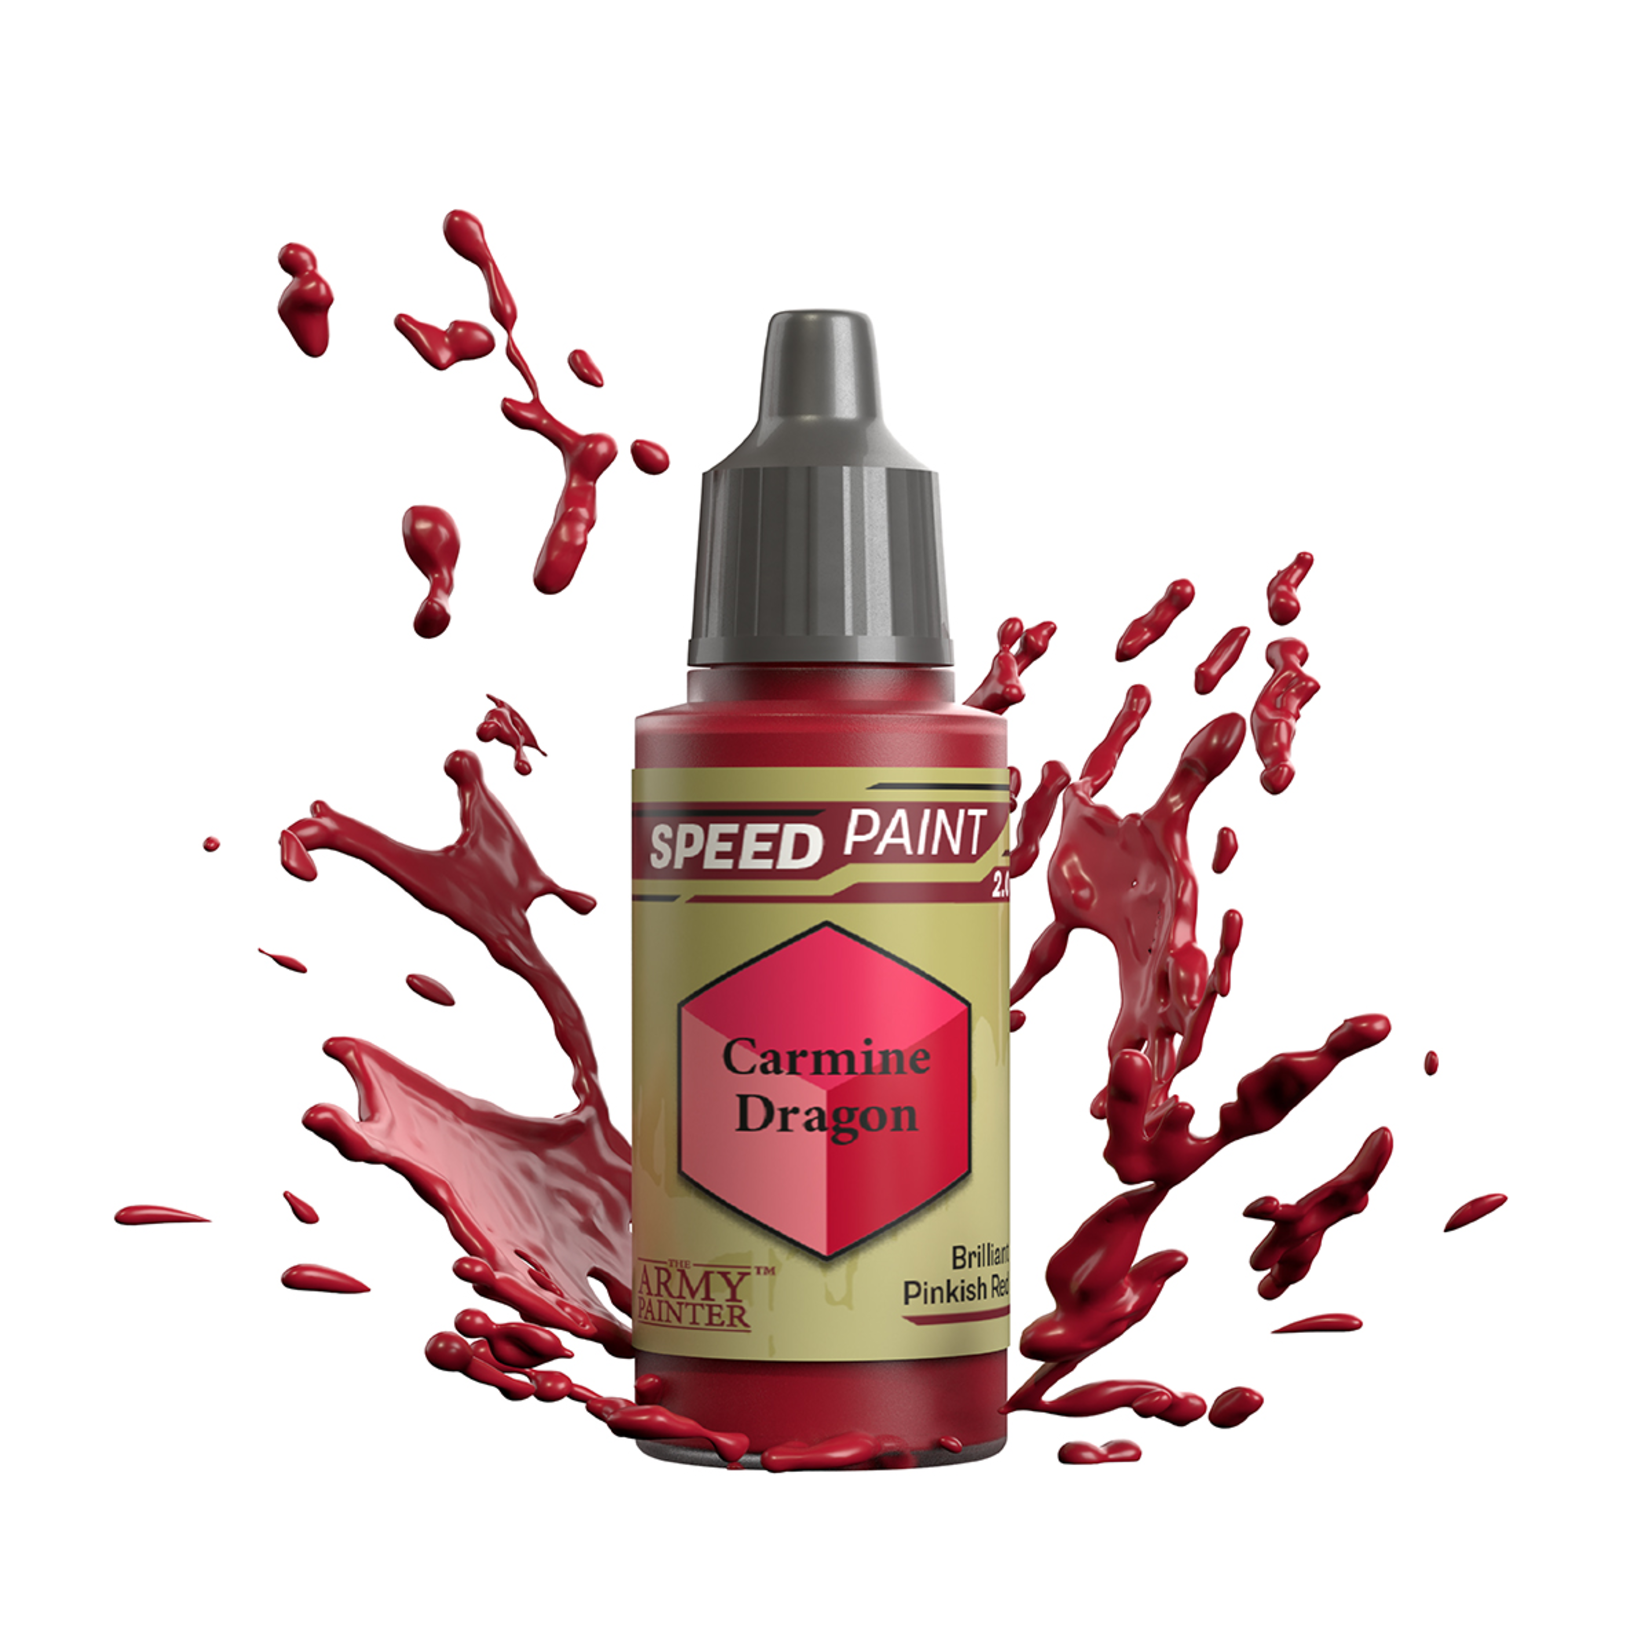 Army Painter Army Painter Speedpaint 2.0 Carmine Dragon 18 ml Brilliant Pinkish Red